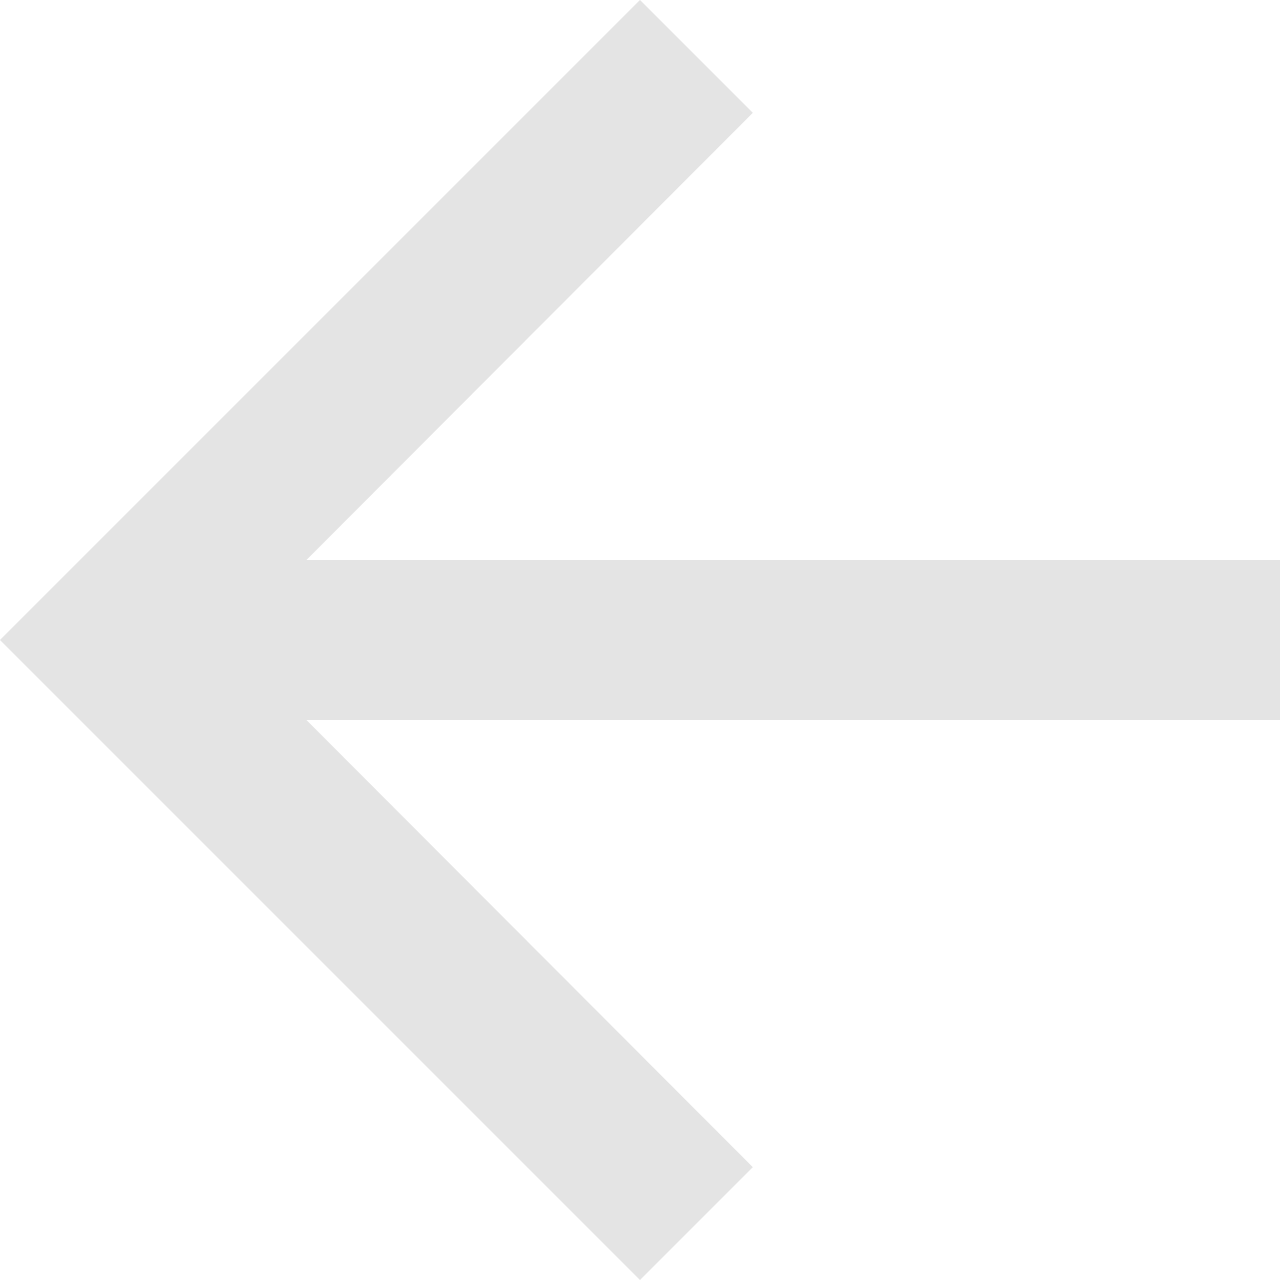 arrow left